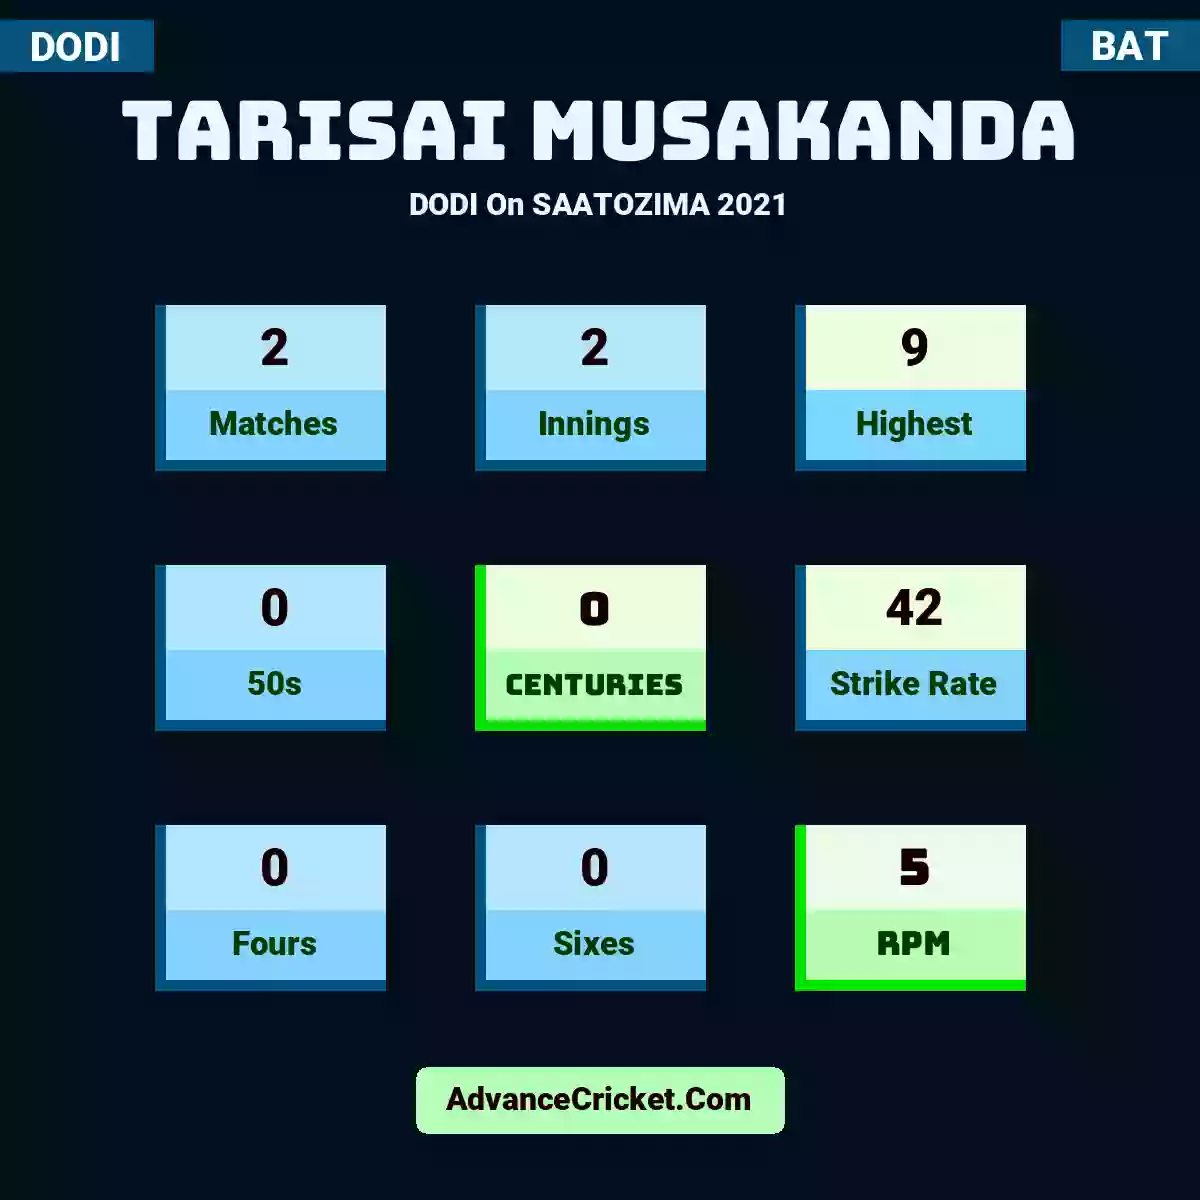 Tarisai Musakanda DODI  On SAATOZIMA 2021, Tarisai Musakanda played 2 matches, scored 9 runs as highest, 0 half-centuries, and 0 centuries, with a strike rate of 42. T.Musakanda hit 0 fours and 0 sixes, with an RPM of 5.